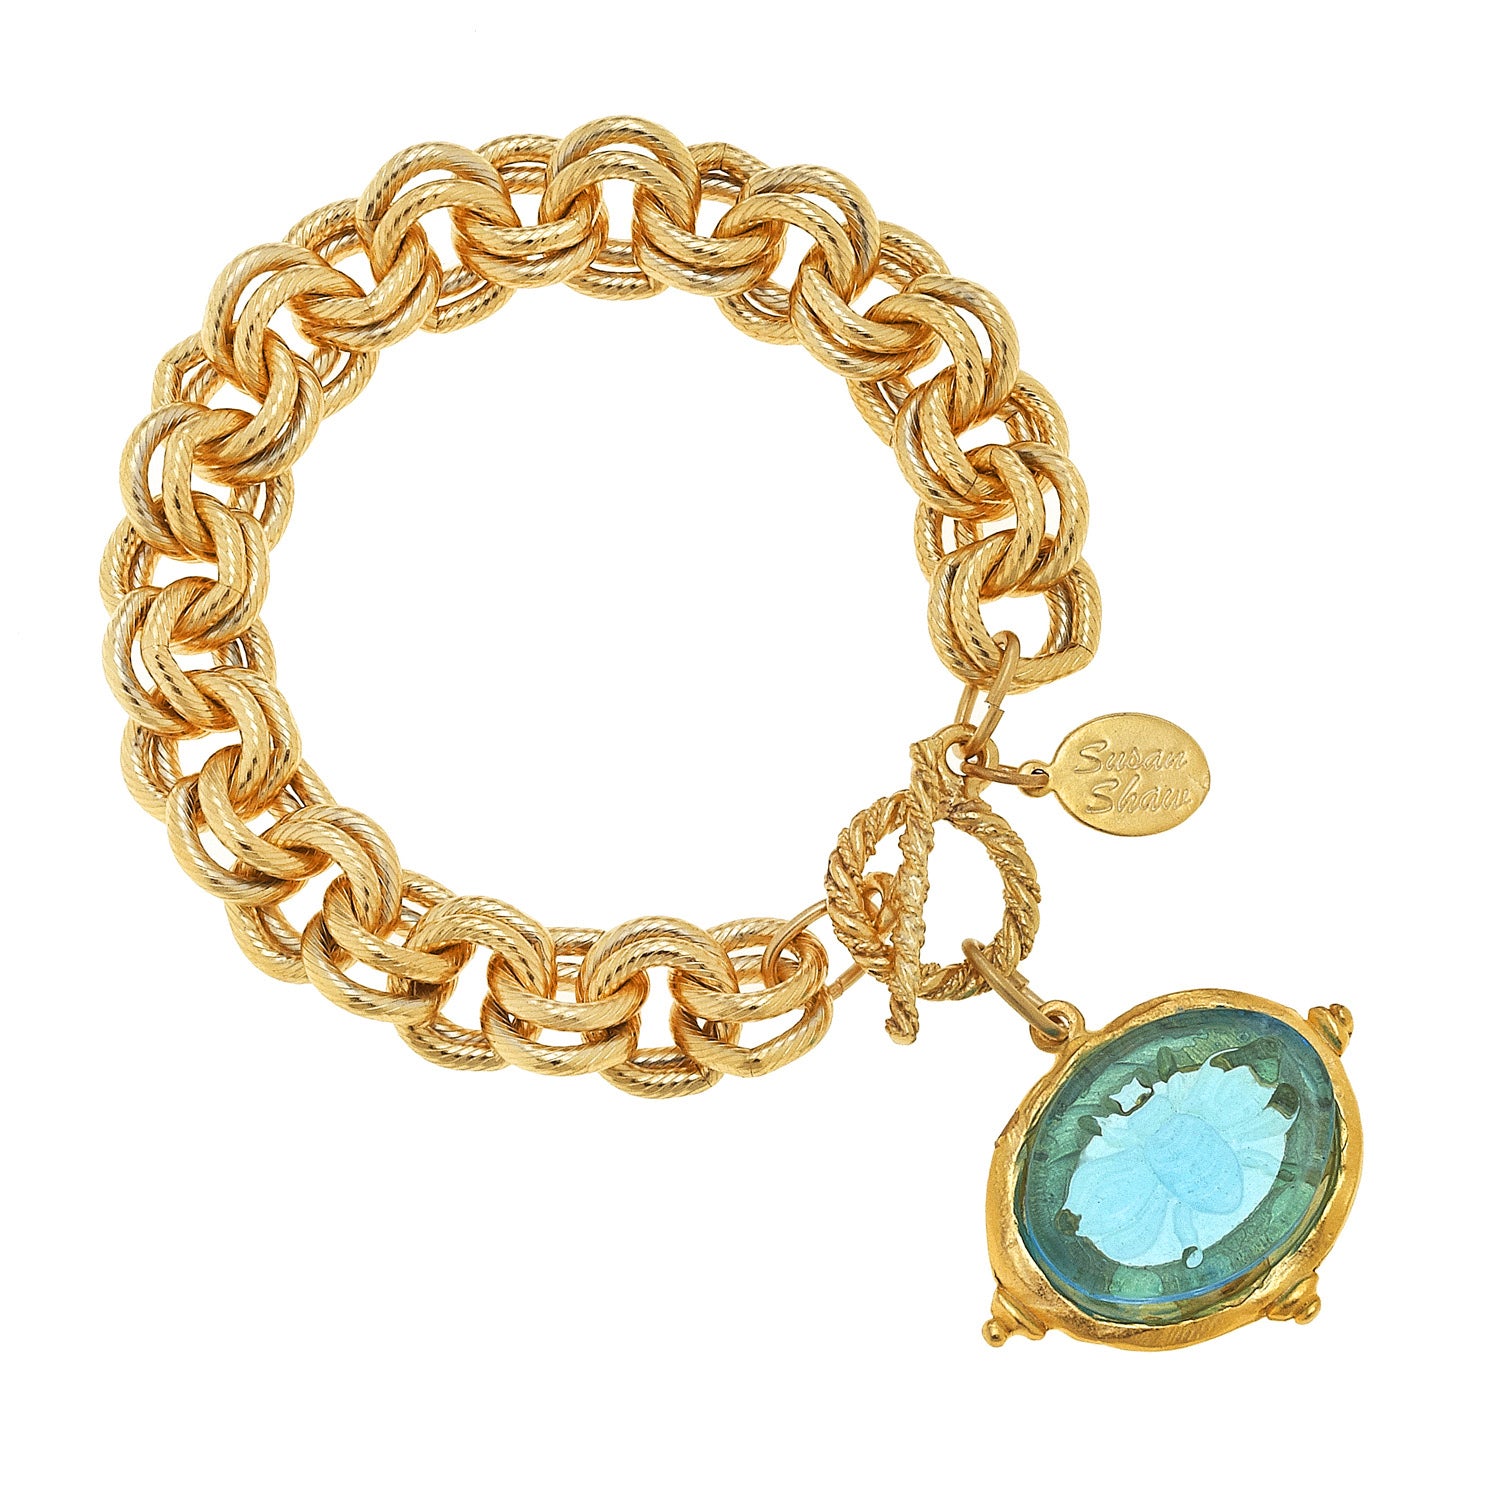 Susan Shaw Aqua Venetian Glass Bee Intaglio Chain Bracelet, Gold Plated 8"